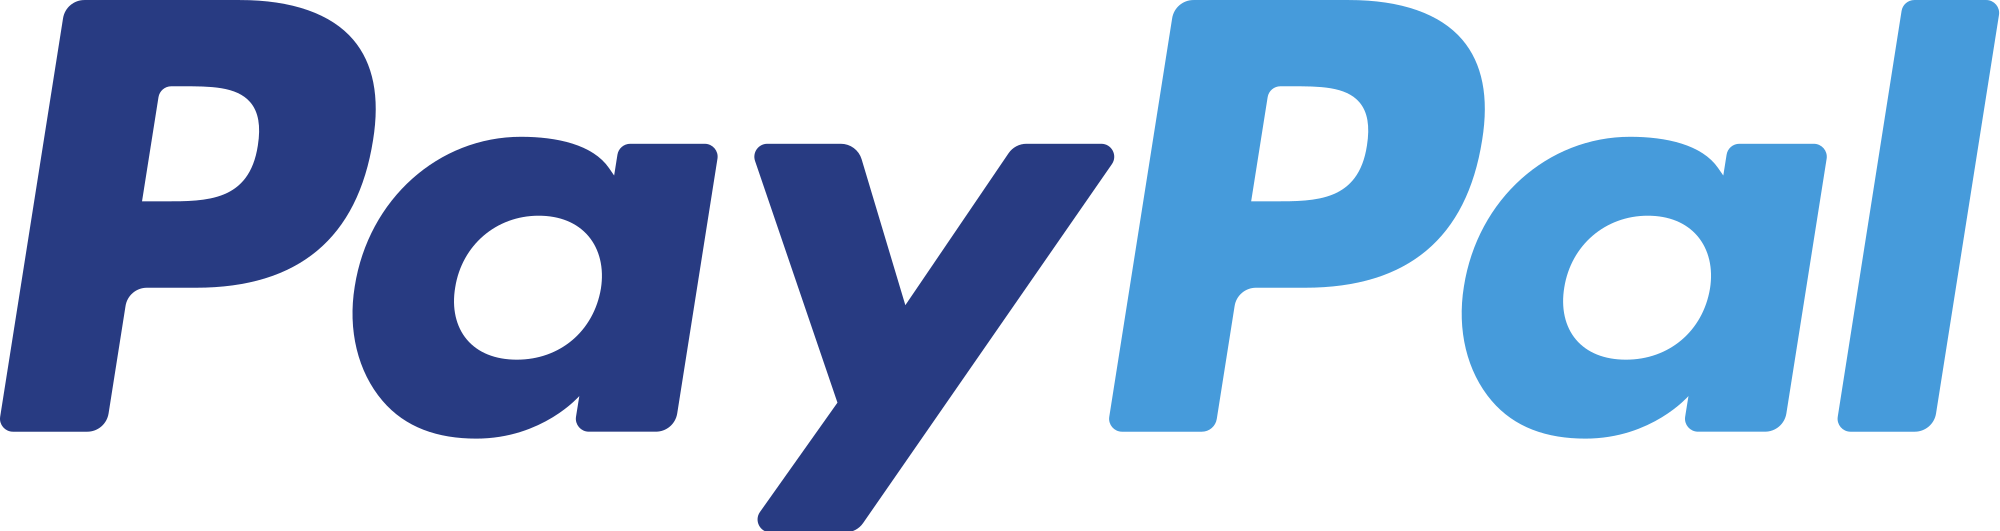 PayPal 2018 Logo - commercetools Partner | PayPal